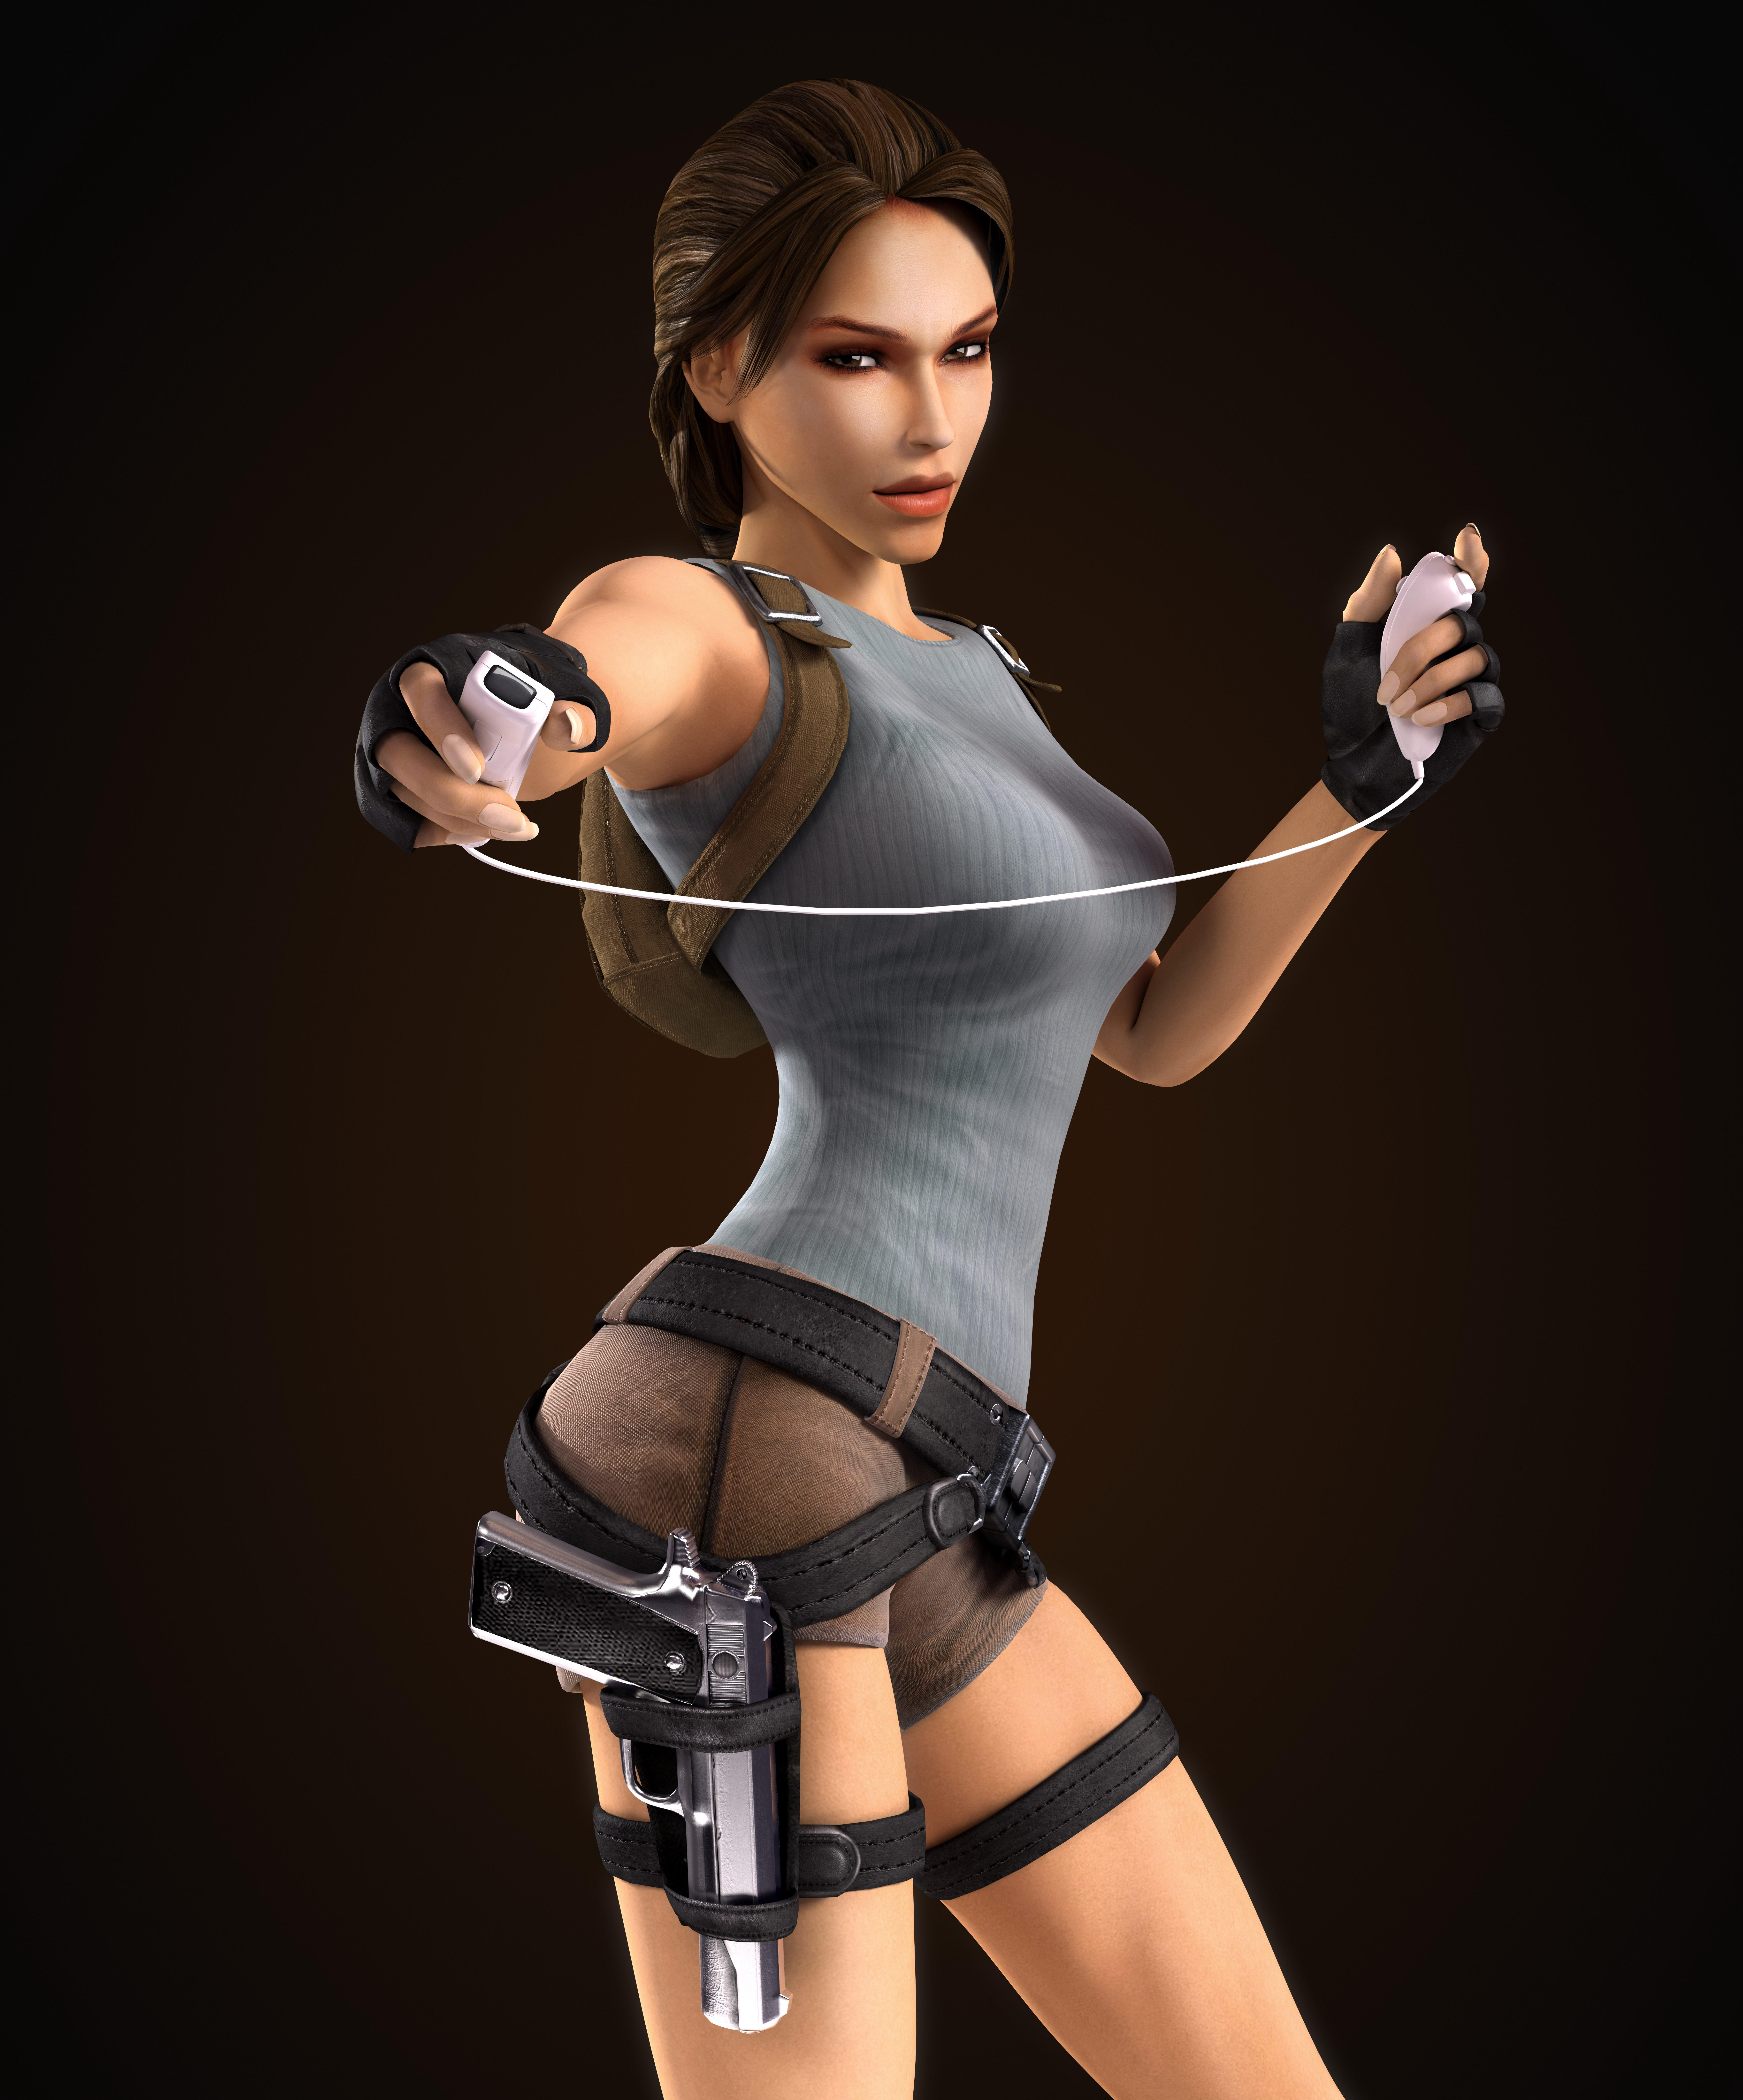 Lara Croft: Tomb Raider Backgrounds on Wallpapers Vista. 